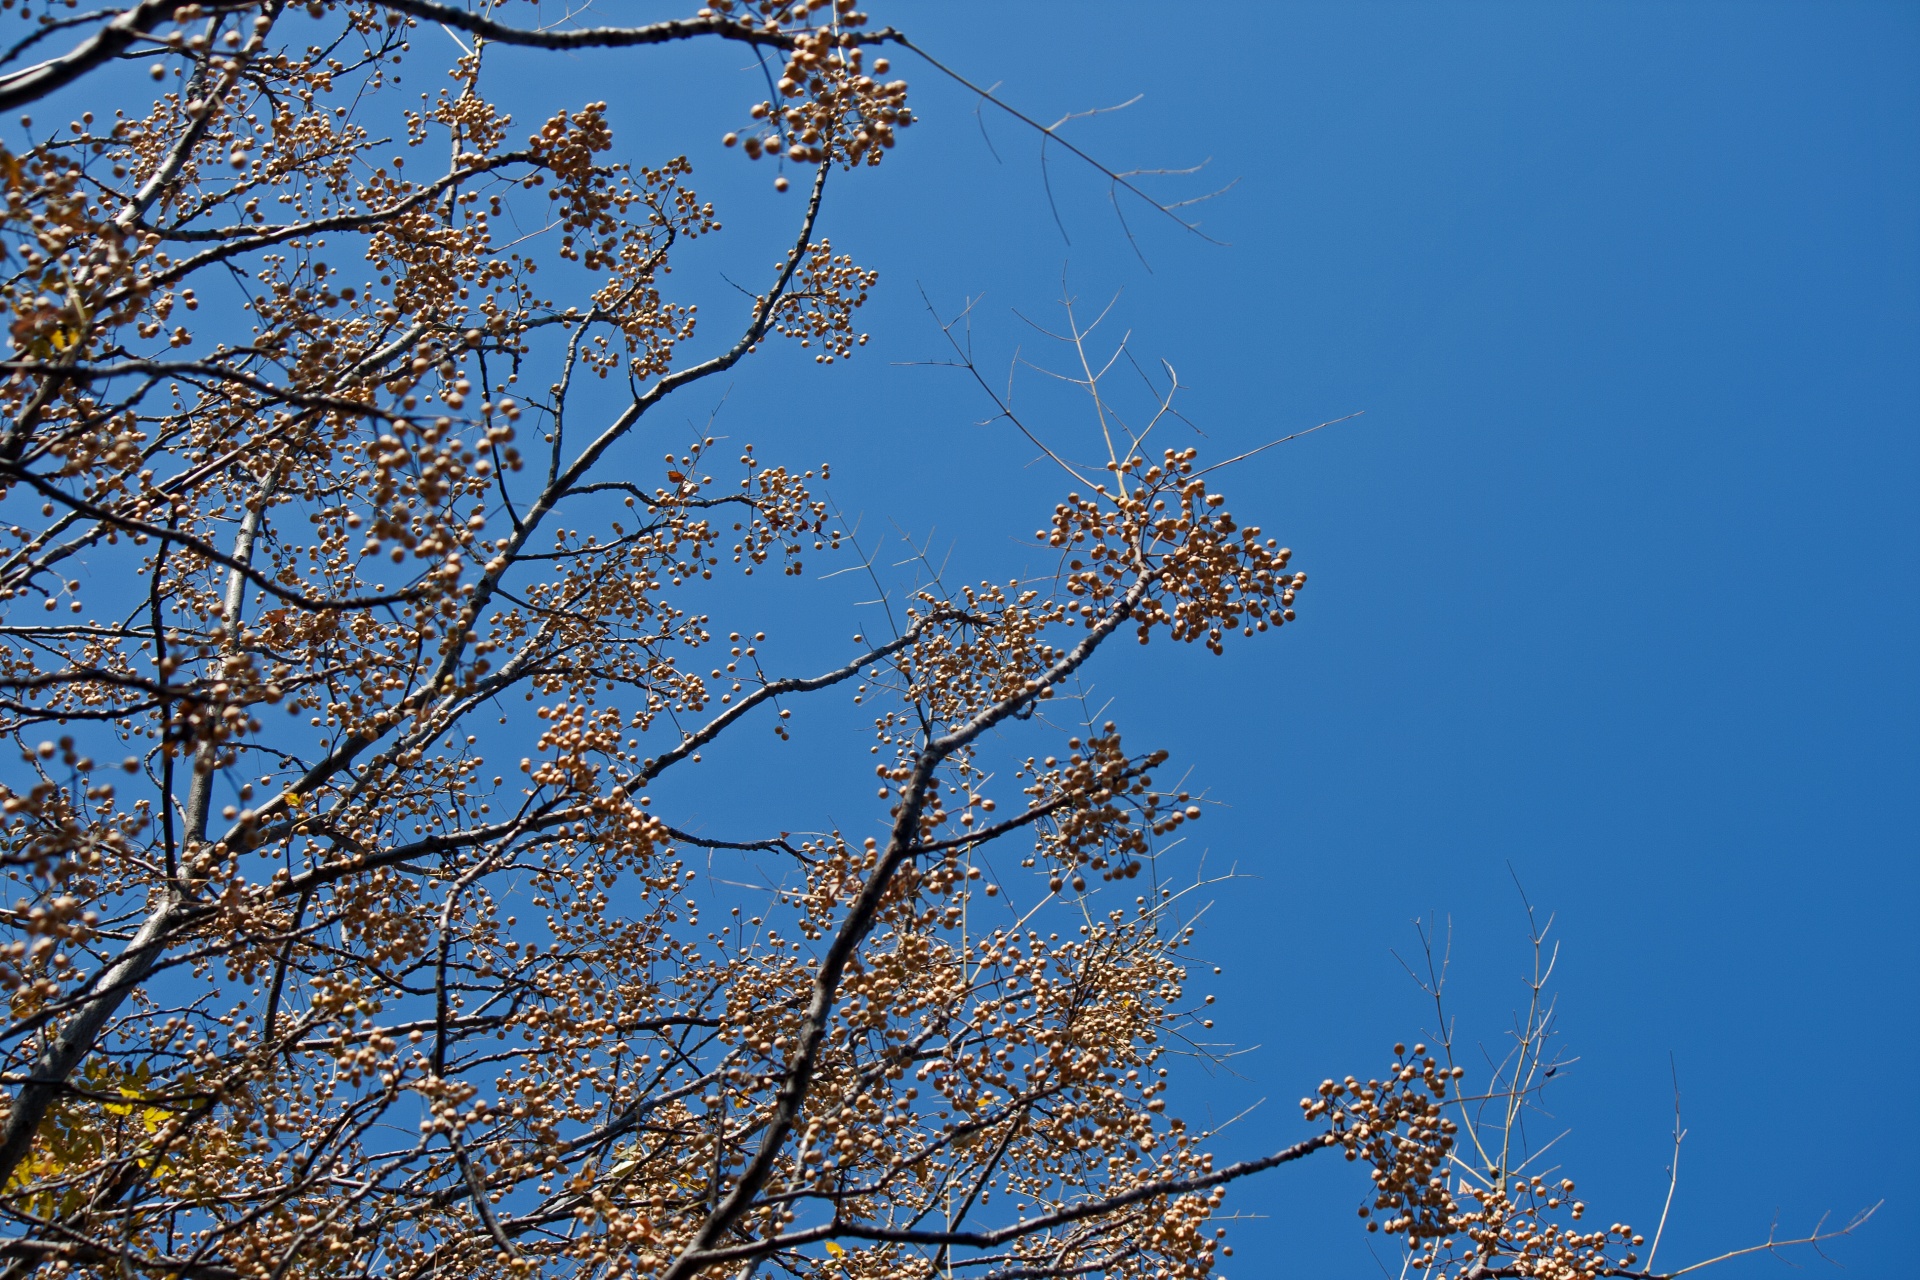 Syringa Tree With Seed Clusters